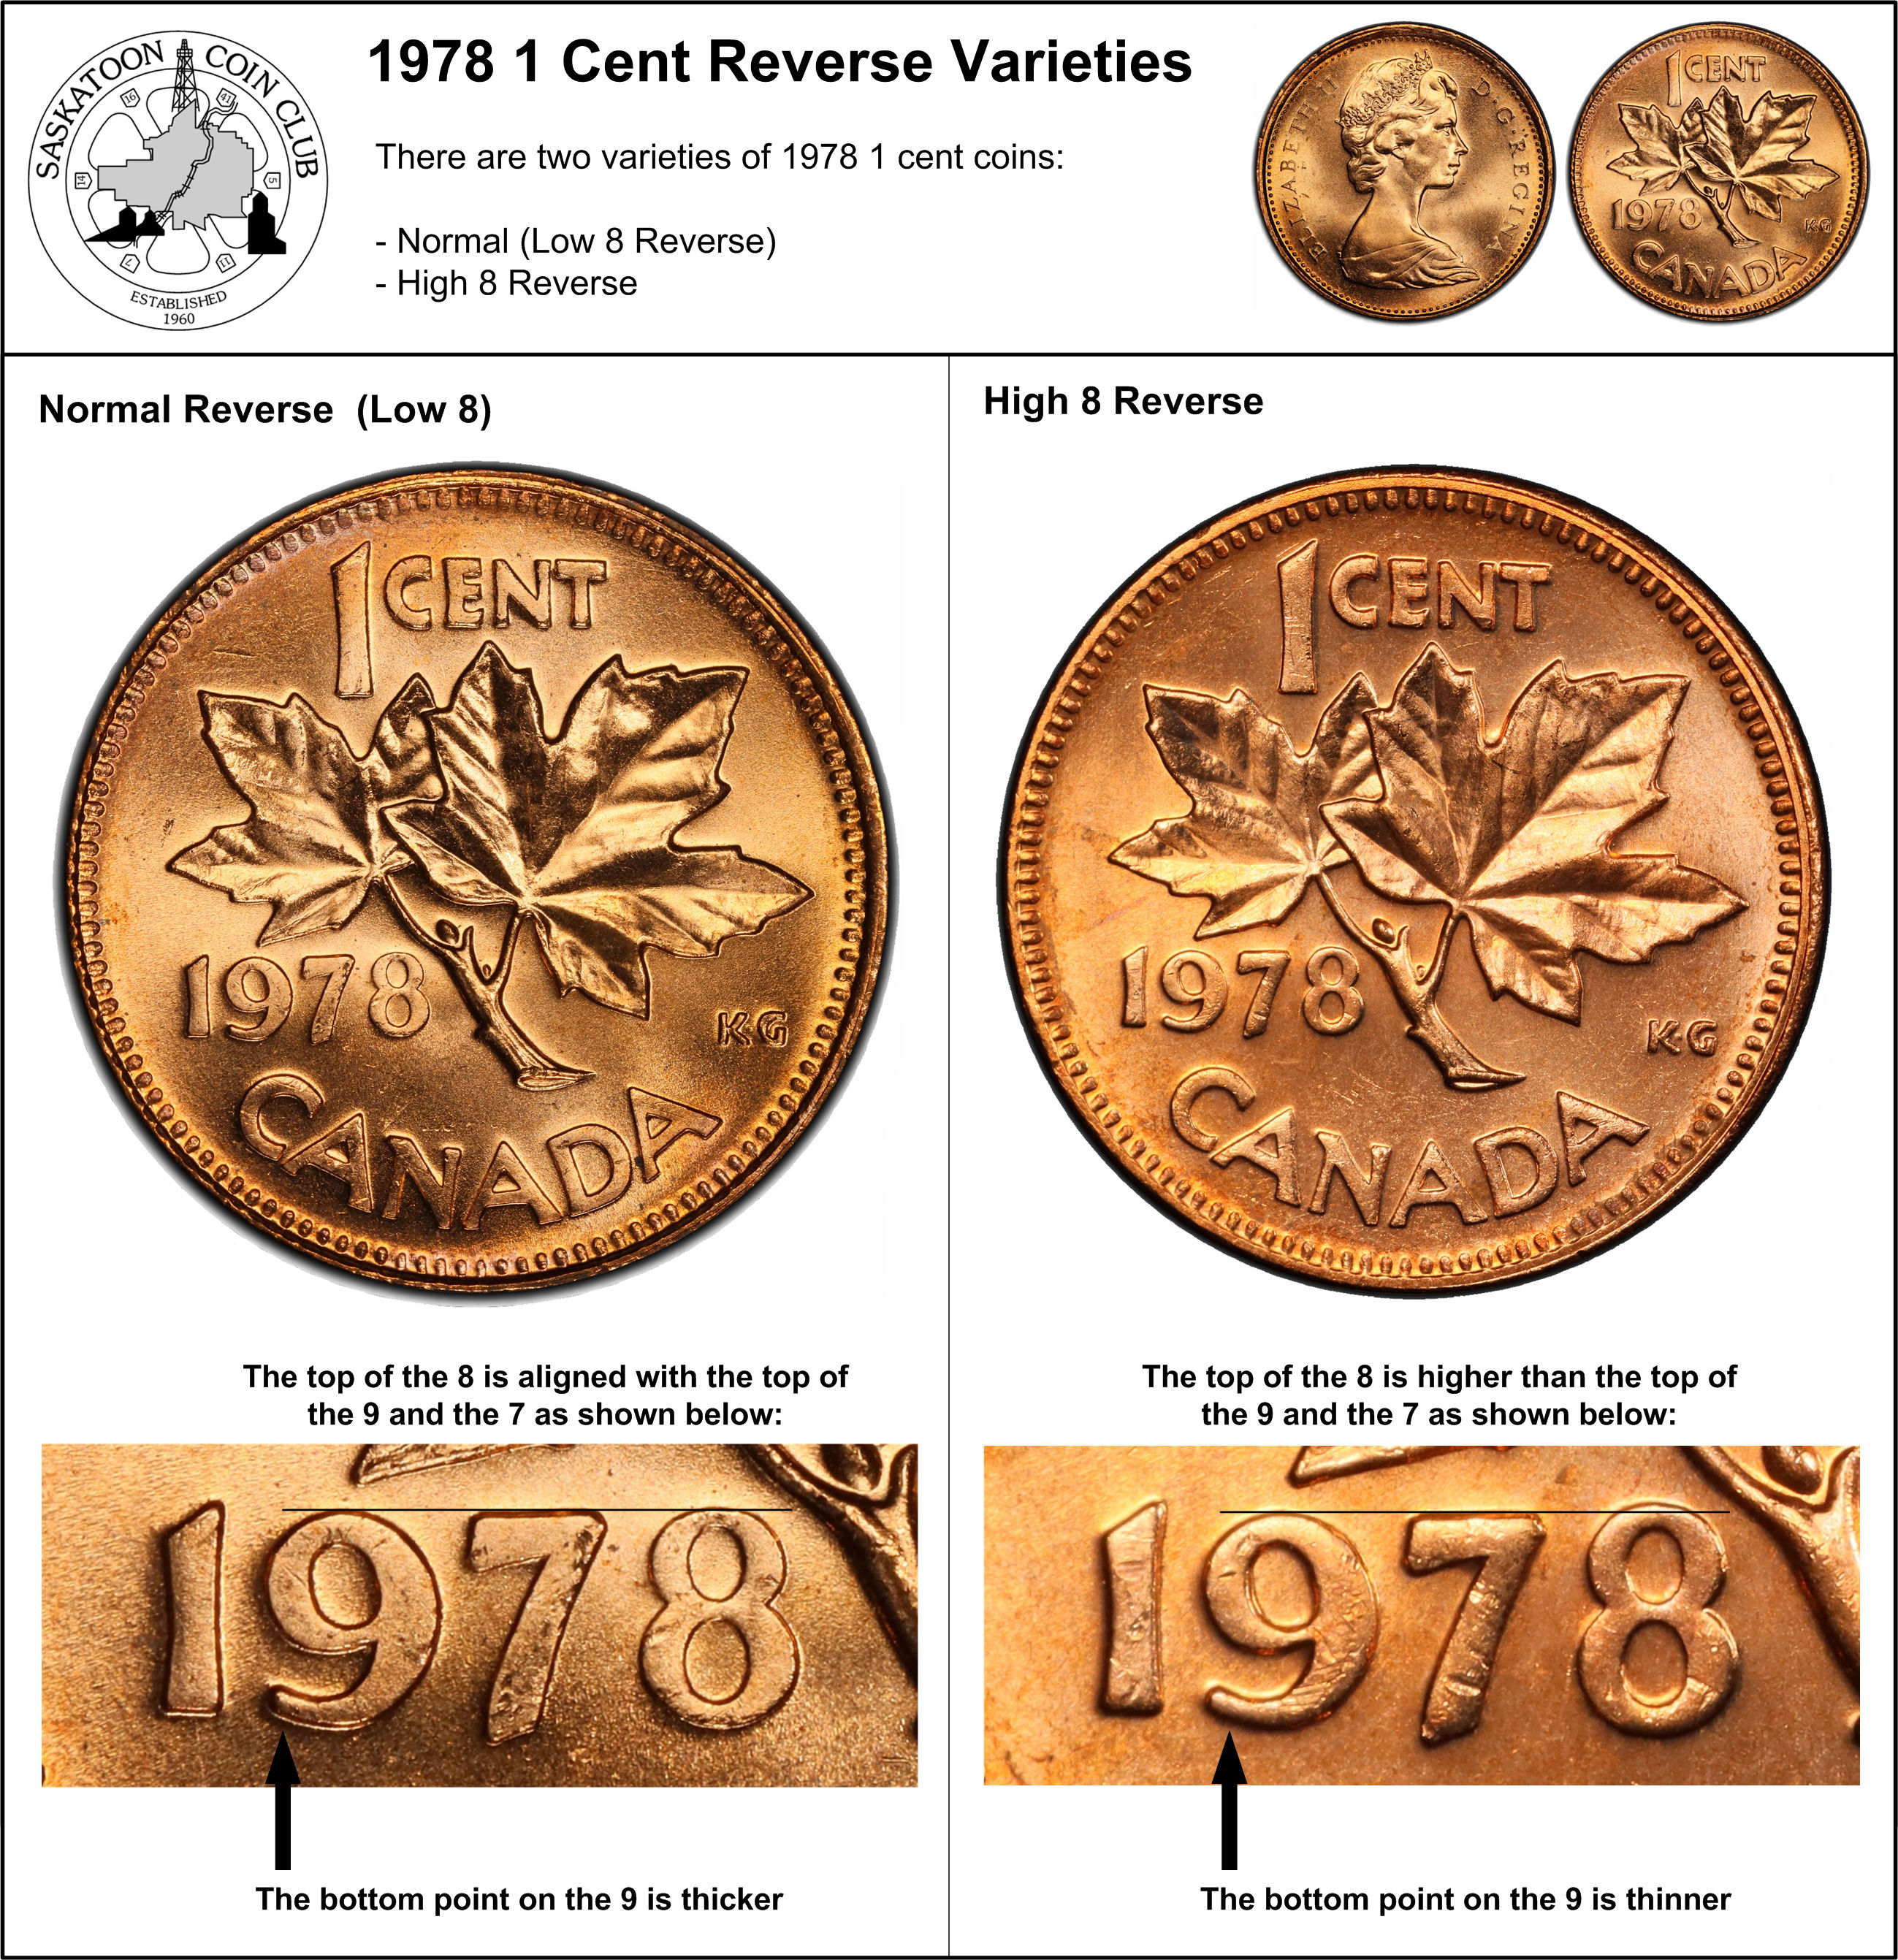 http://www.saskatooncoinclub.ca/articles/article_images/orv/03_1978_1-cent_rev_varieties.jpg